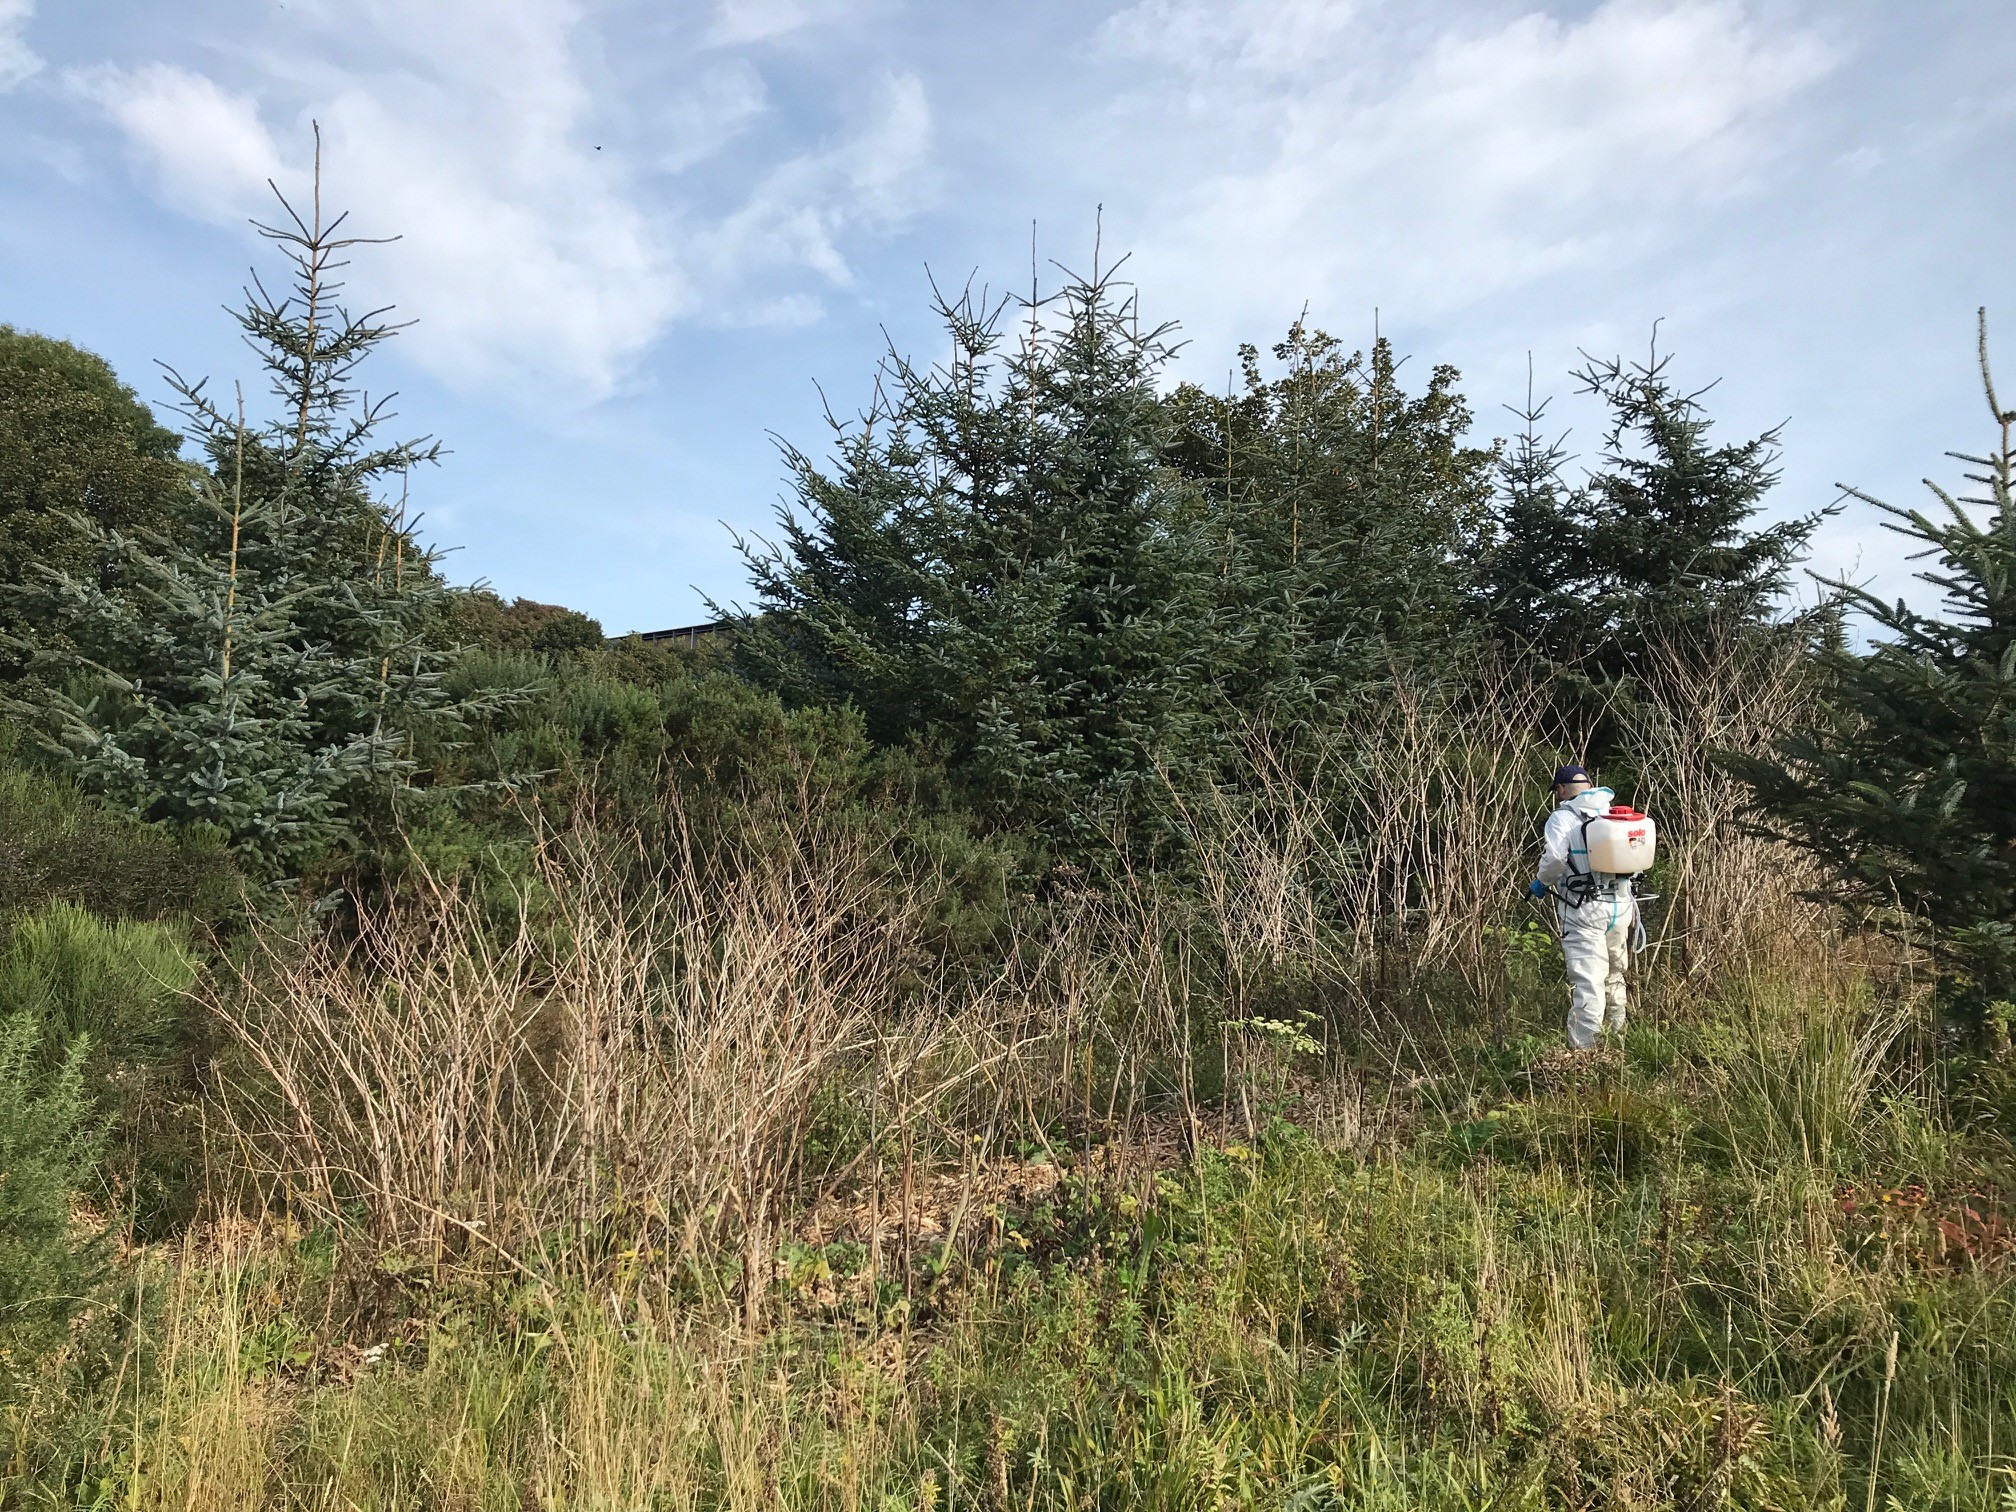 Japanese knotweed on Ury burn site C in 2020 - dead stems visible